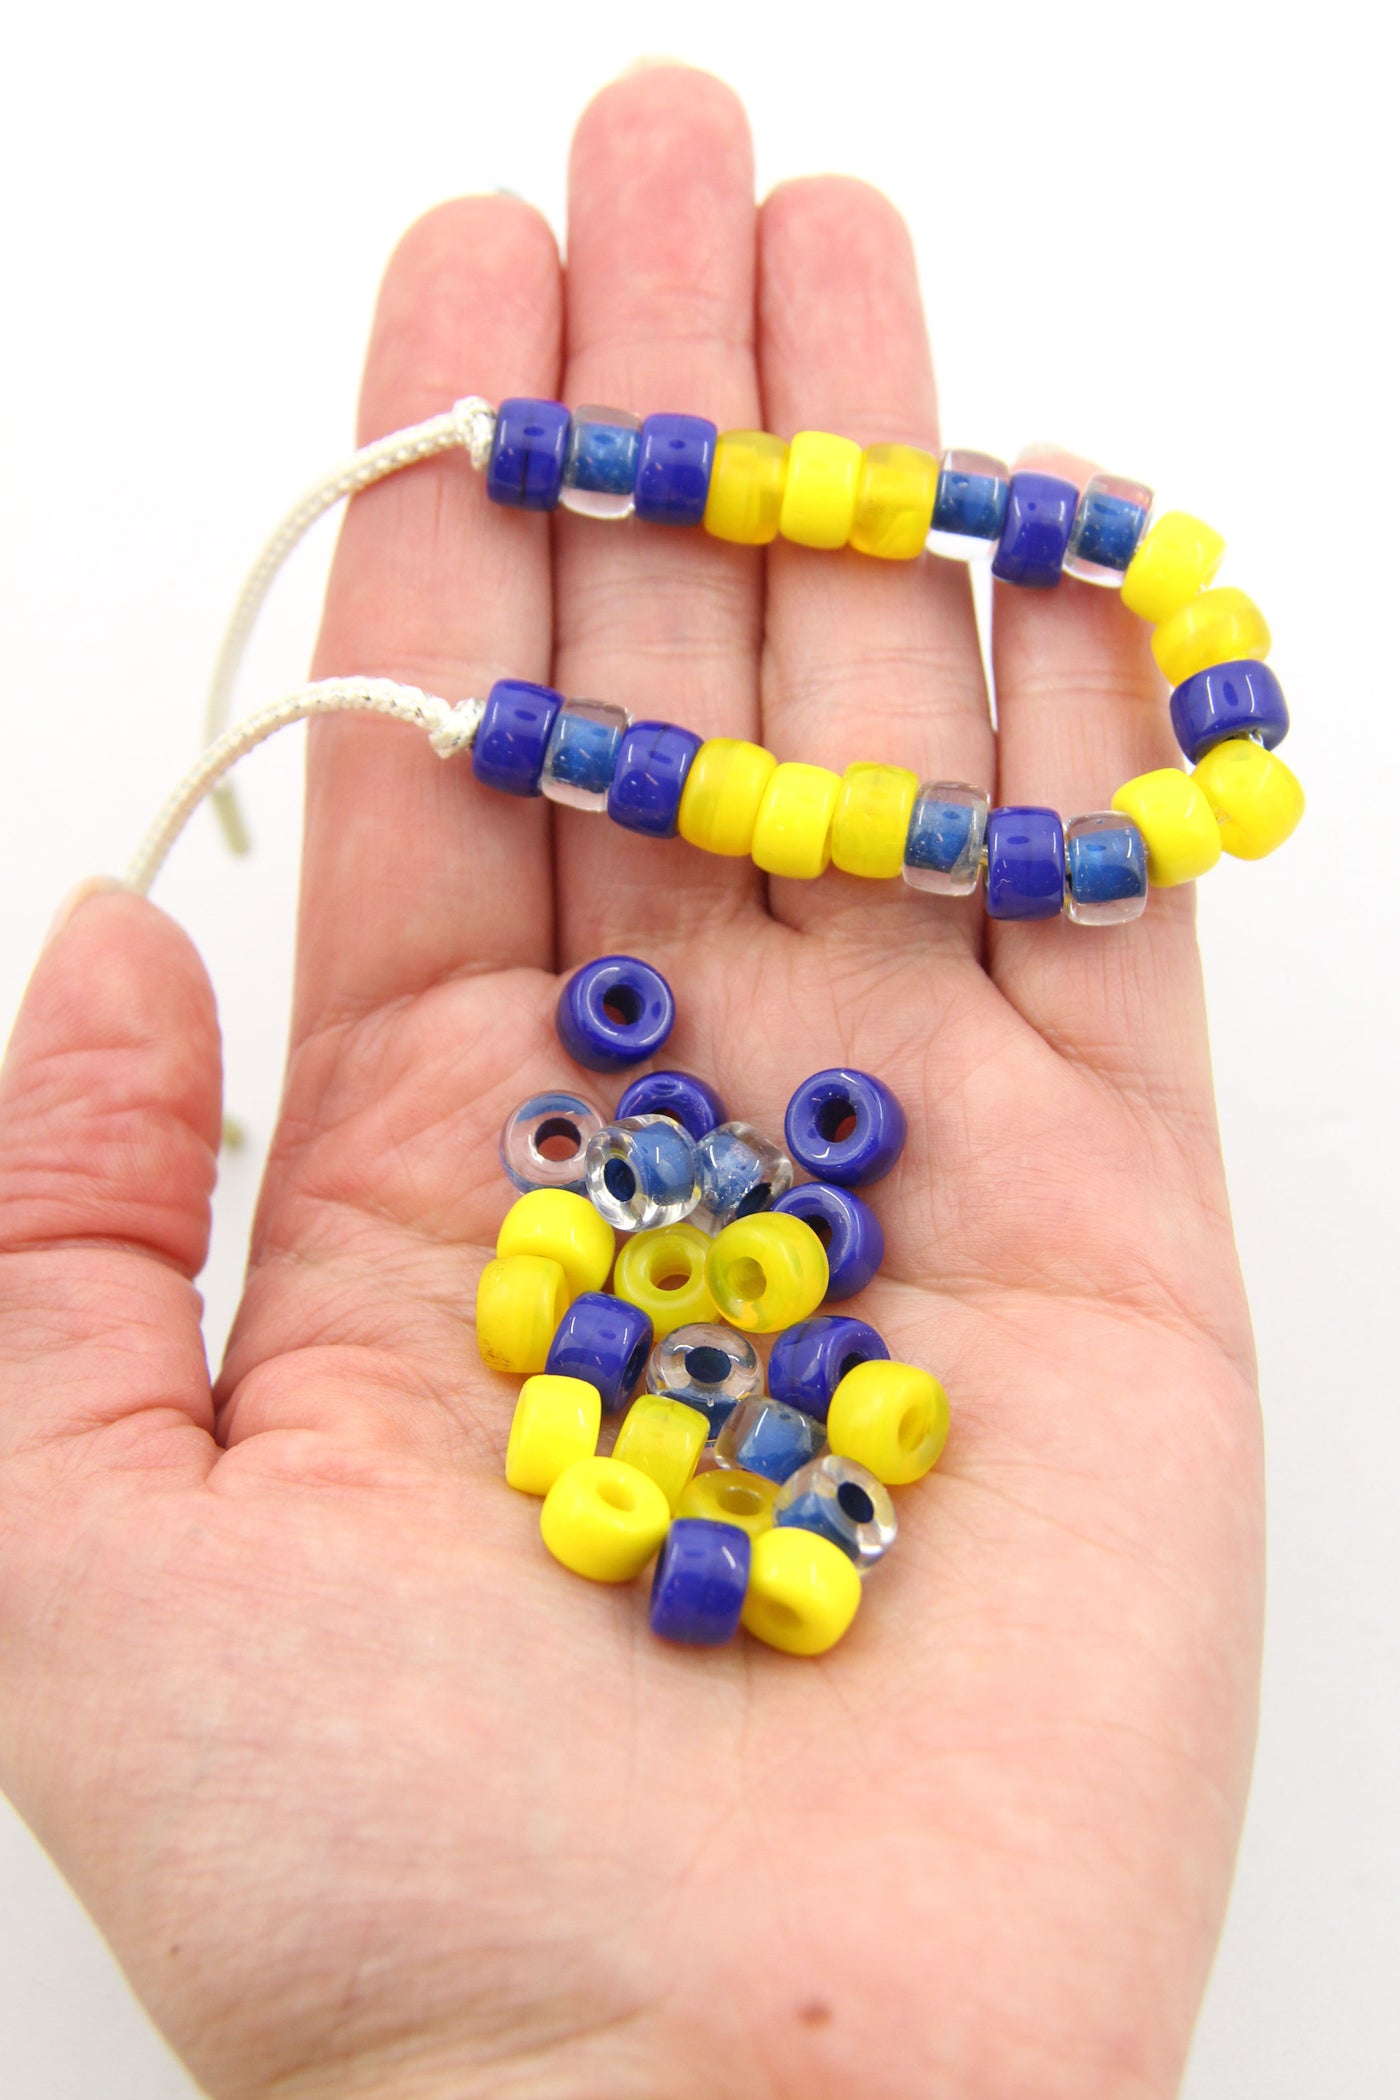 Peace In Ukraine Roller Bead DIY Tie On Bracelet Kit, Blue & Yellow Czech Glass Pony Beads + Lurex Cord